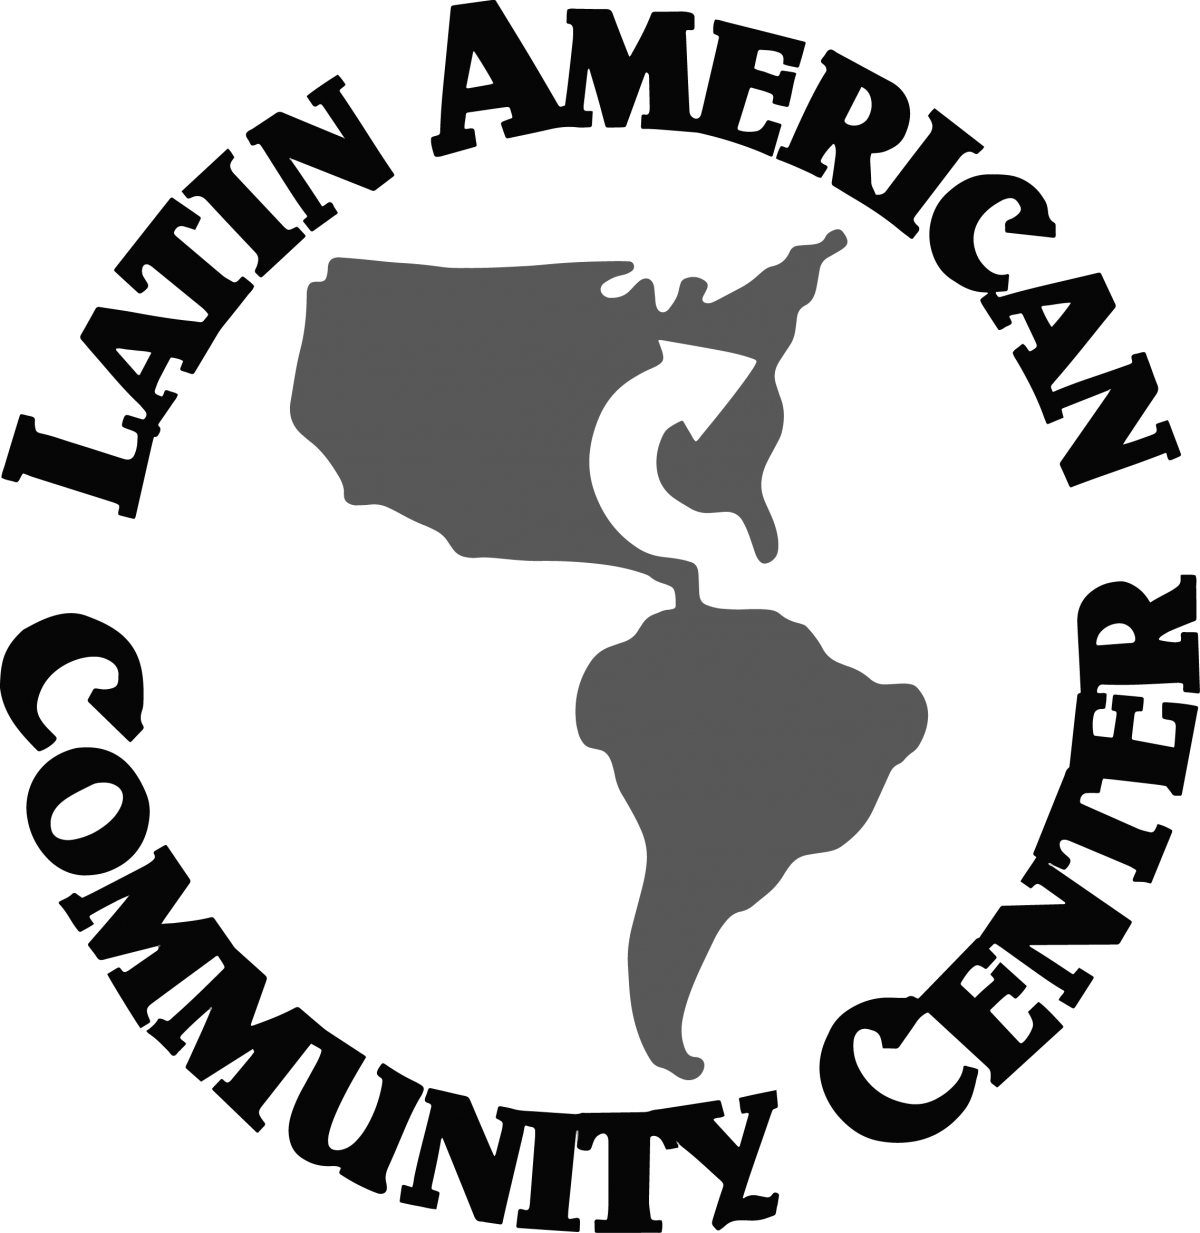 Latin American Community Center: A Vital Community